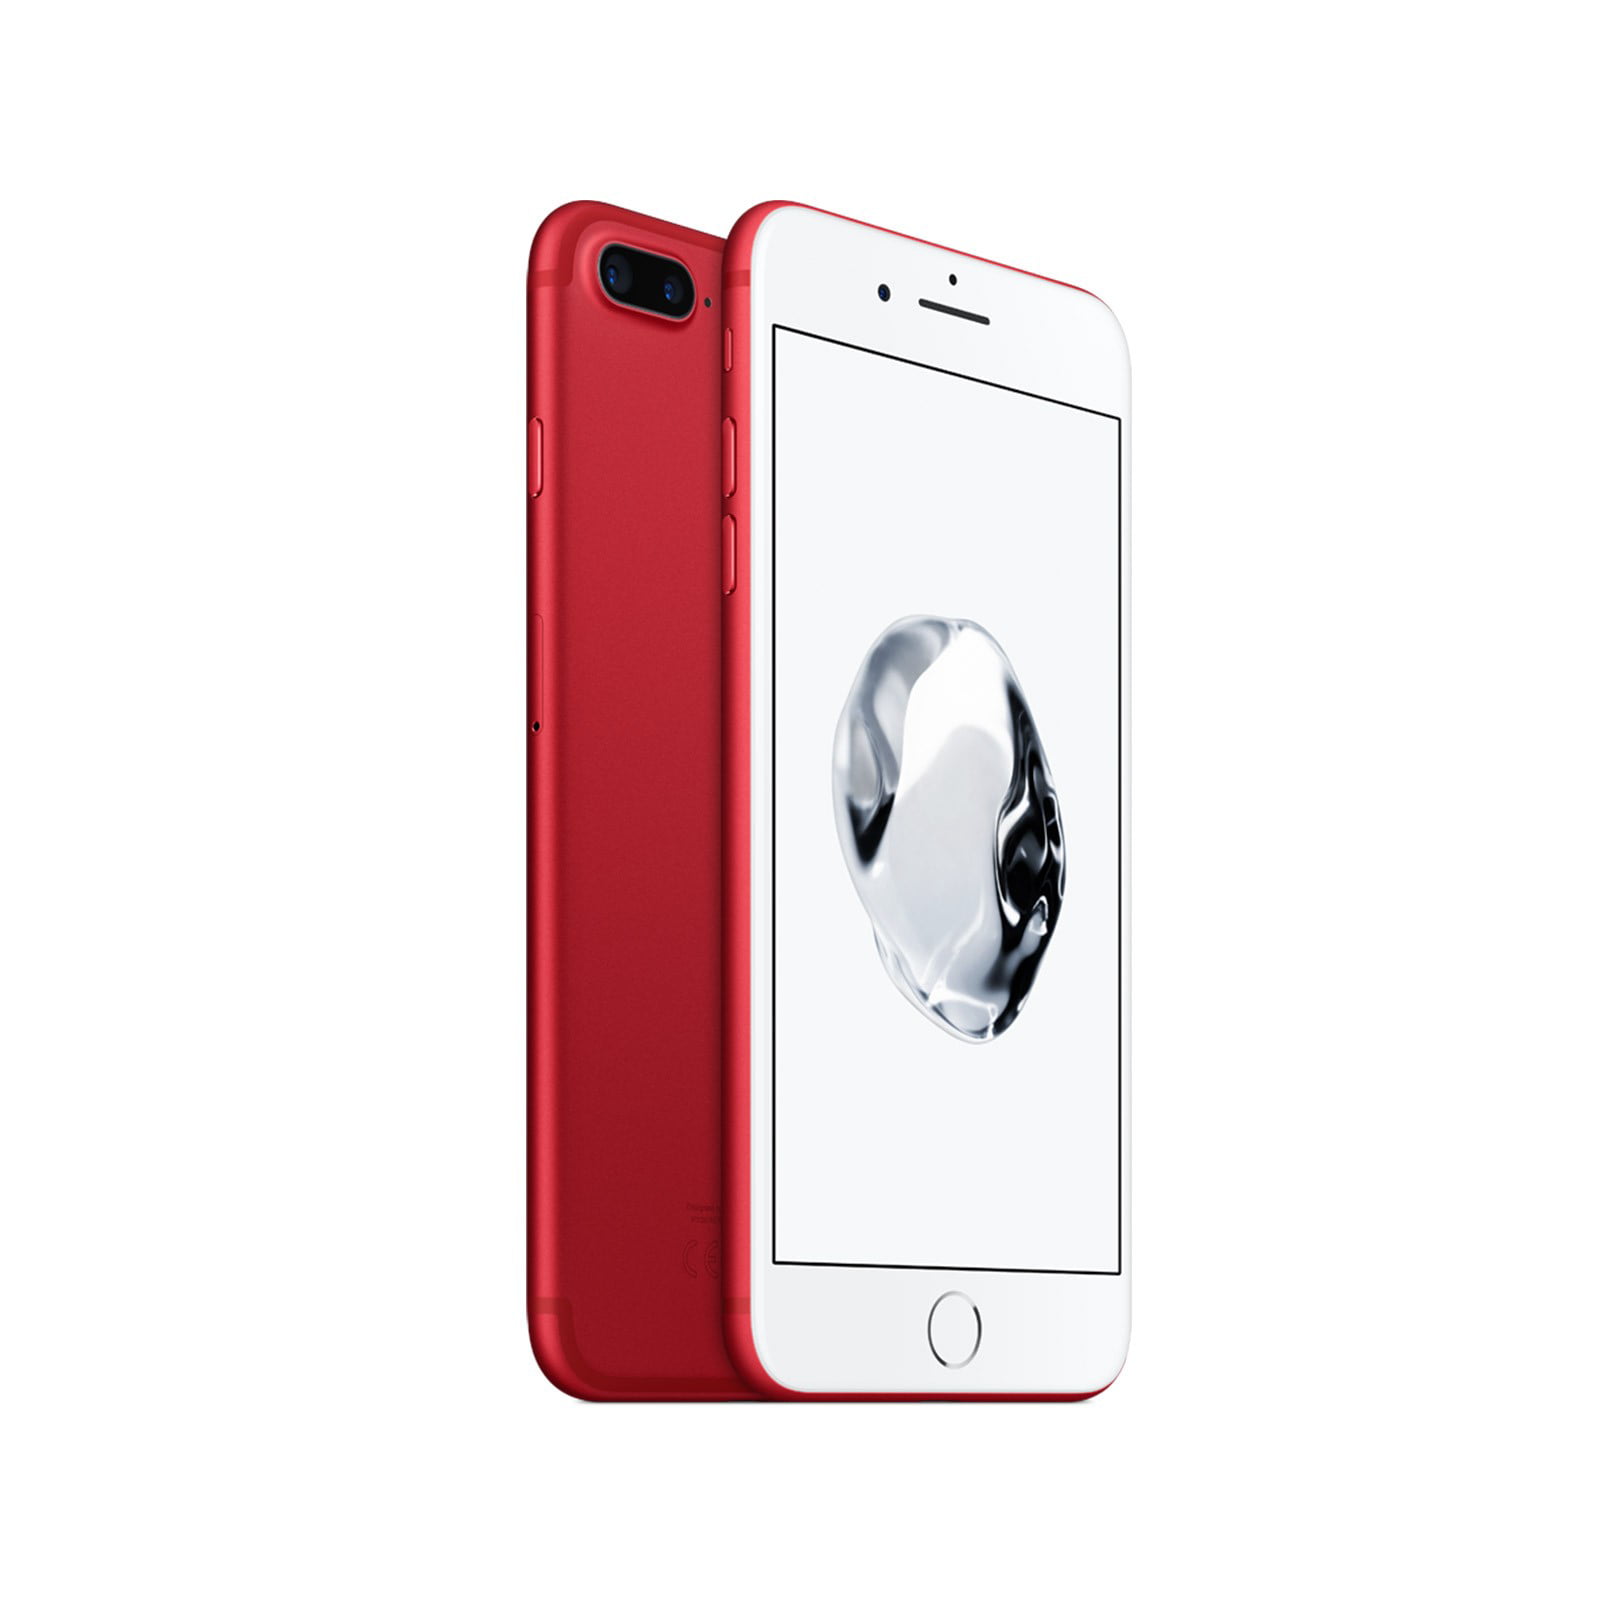 Proberen Incubus Raad Like New Apple iPhone 7 Plus GSM Unlocked - Walmart.com